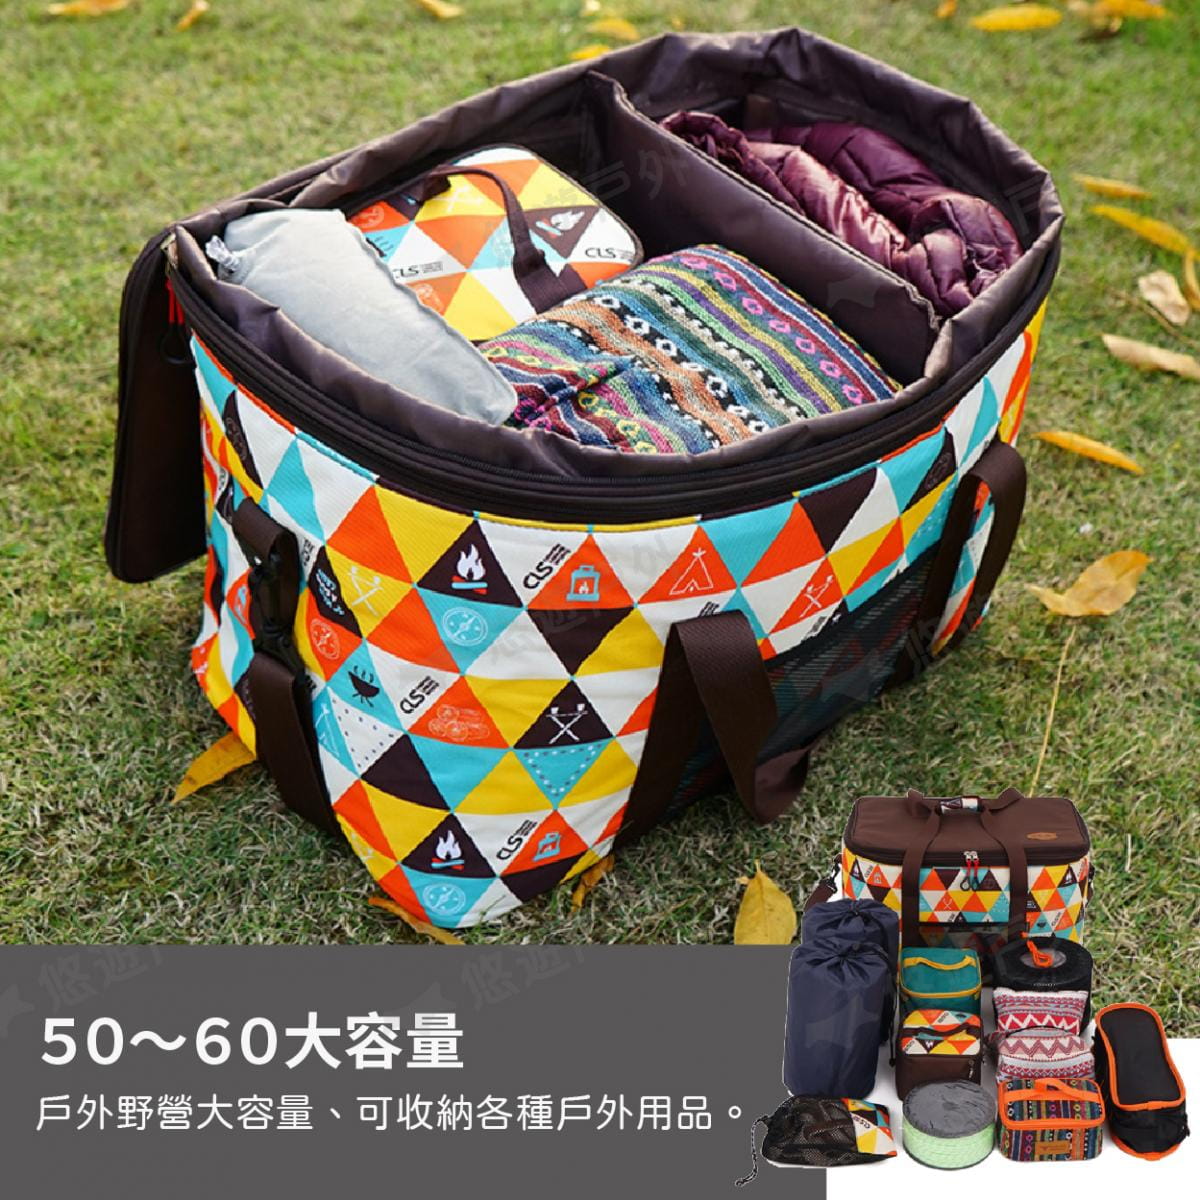 【CLS】韓國 旅行野餐包 50L大容量 野營包 可調節高度 收納包 露營手提包 自駕旅行 野餐包 4